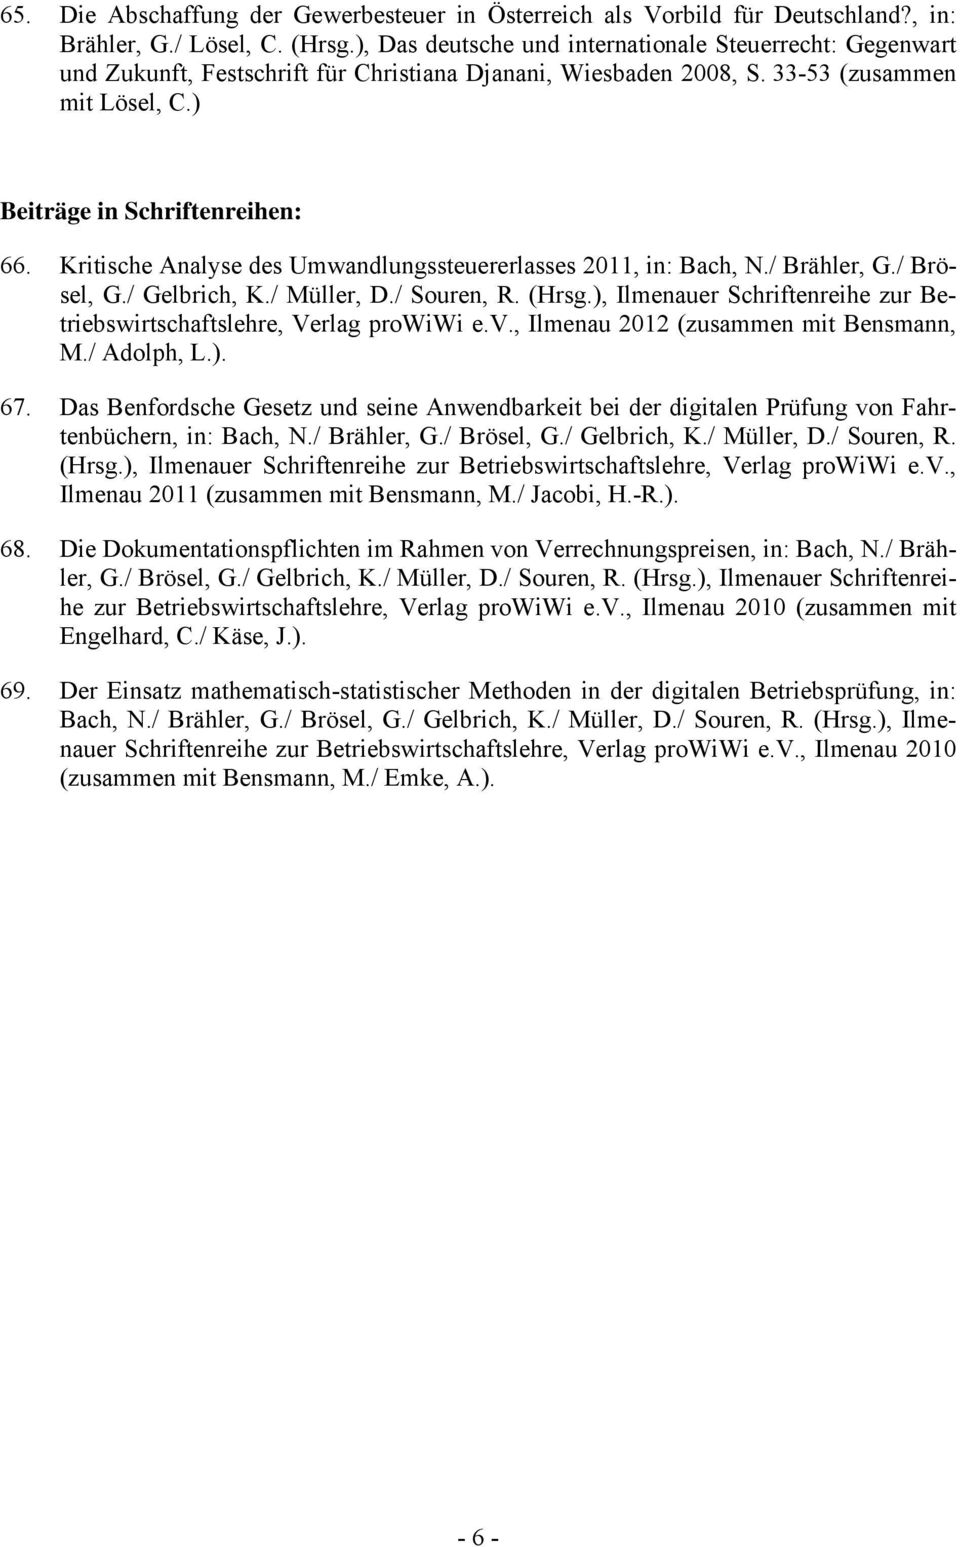 Kritische Analyse des Umwandlungssteuererlasses 2011, in: Bach, N./ Brähler, G./ Brösel, G./ Gelbrich, K./ Müller, D./ Souren, R. (Hrsg.